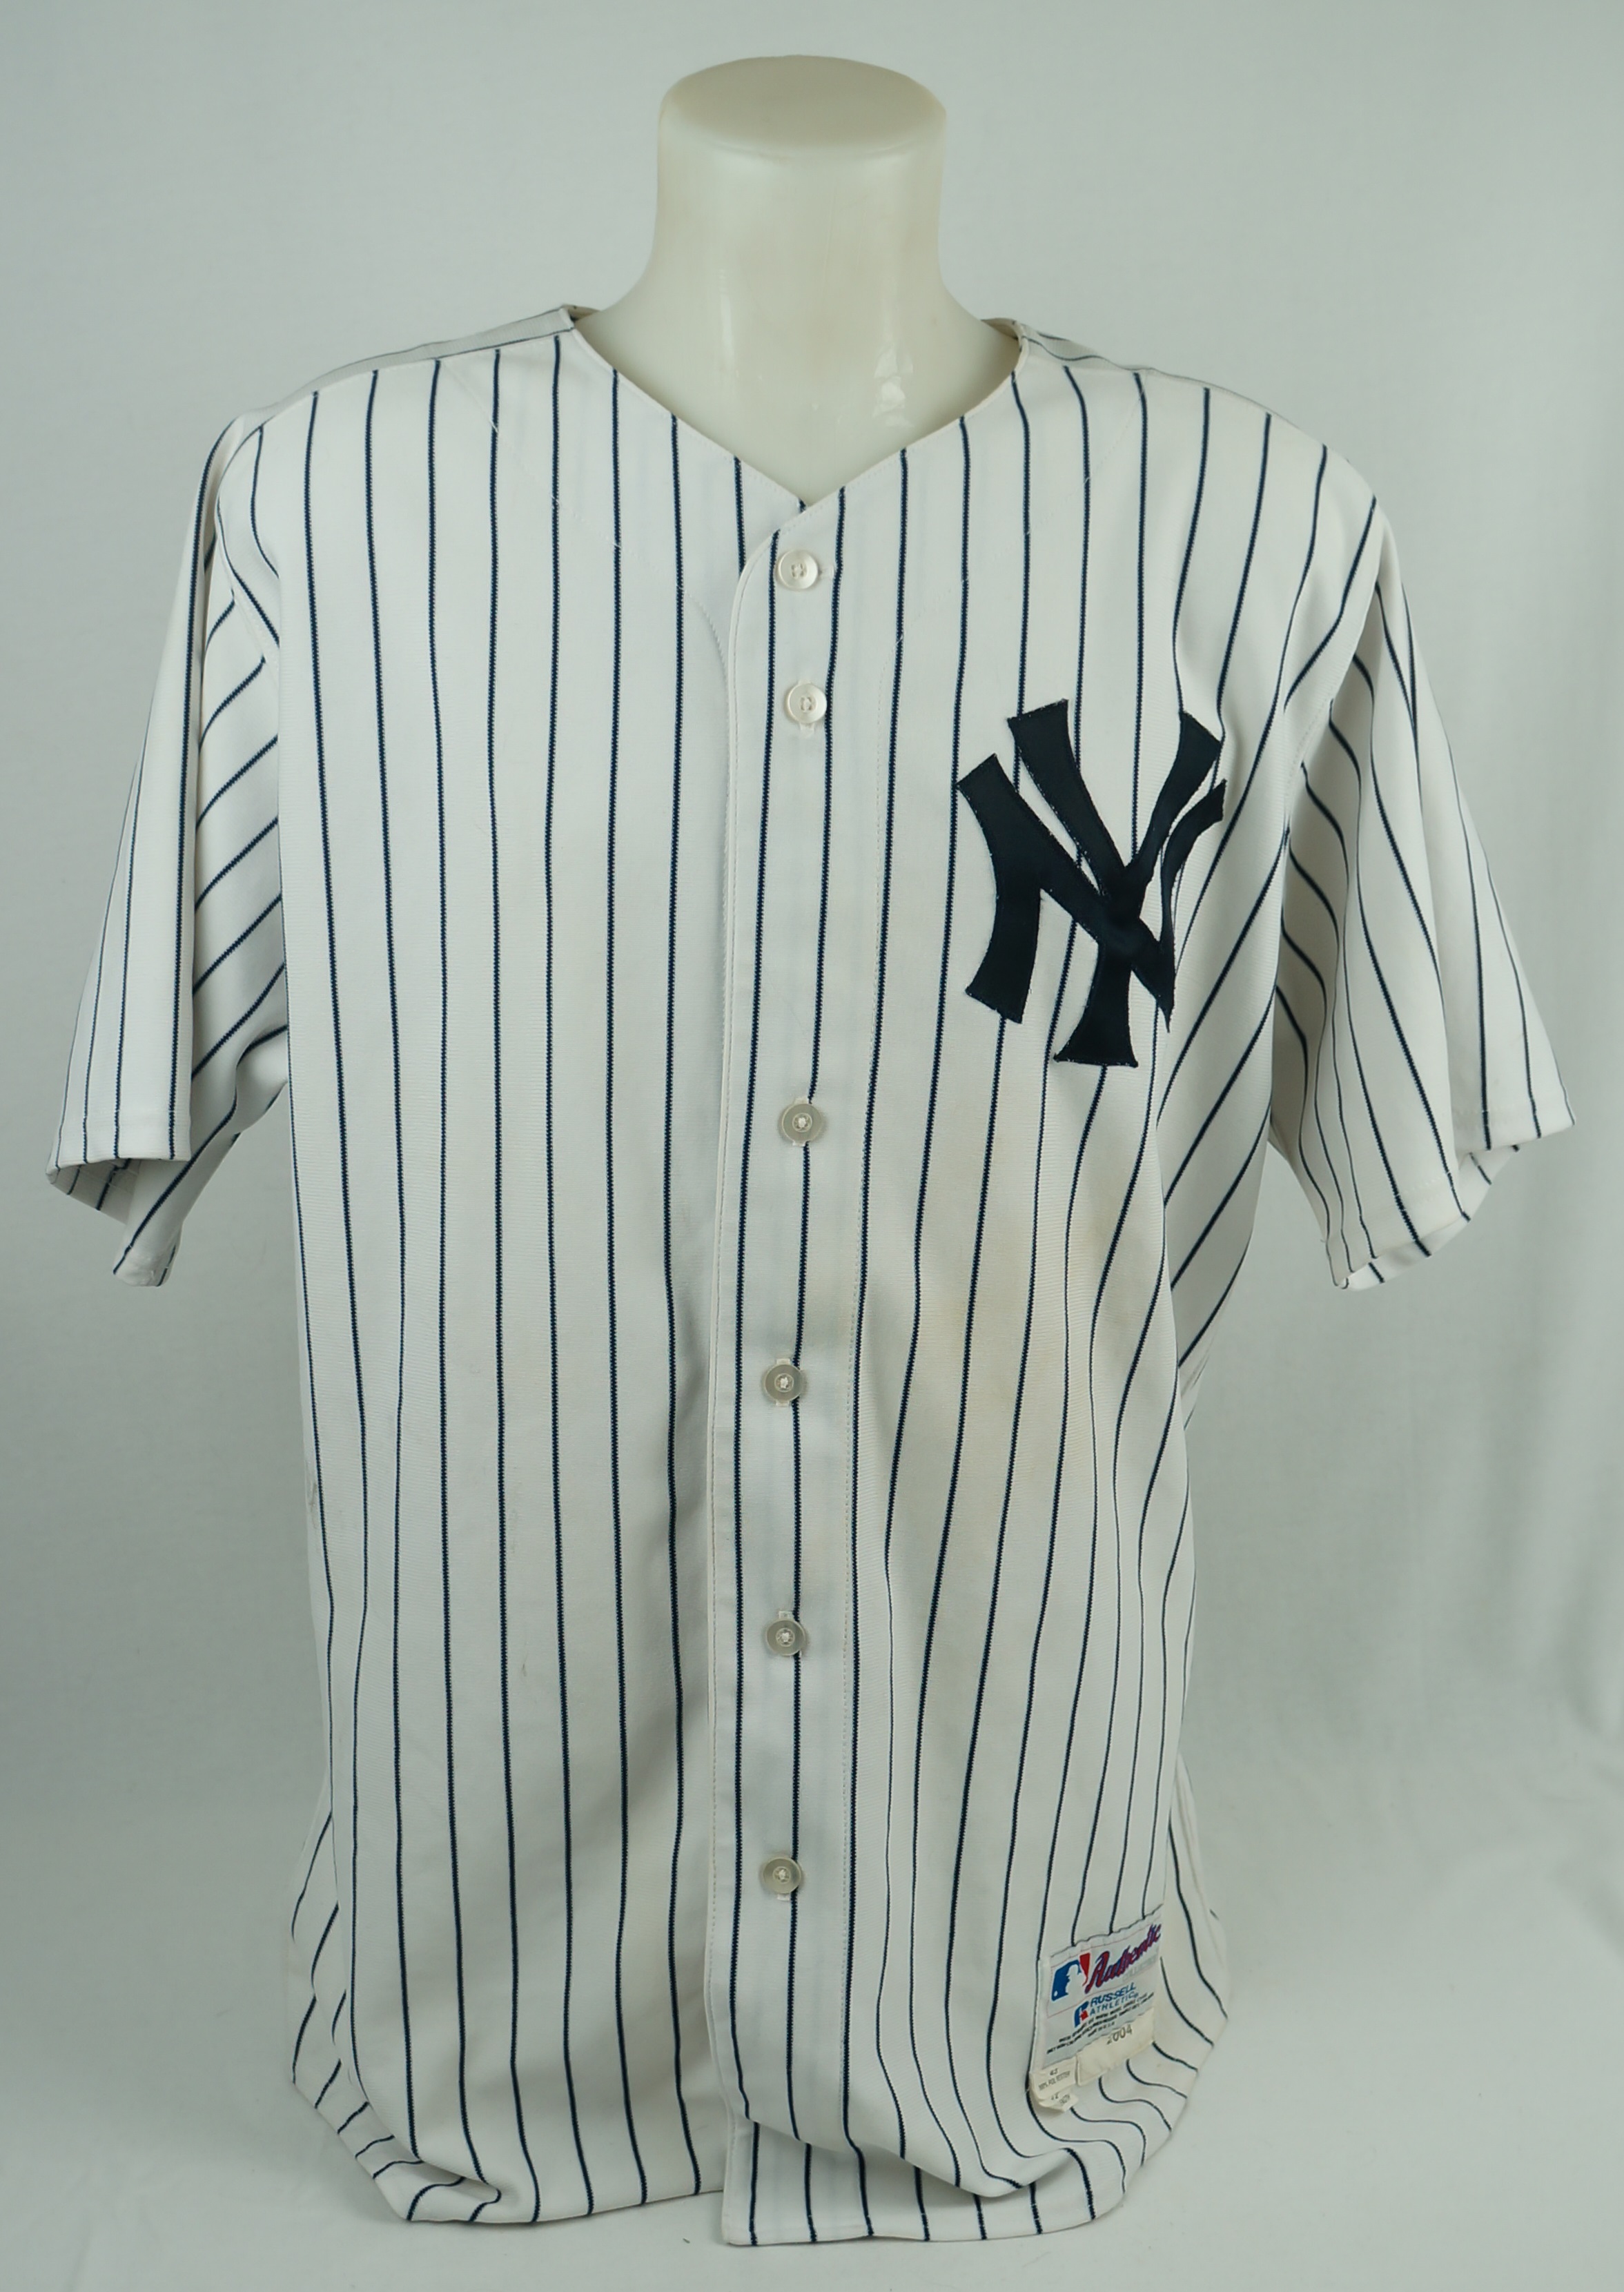 Lot Detail - Derek Jeter 2004 New York Yankees Game Used Jersey w